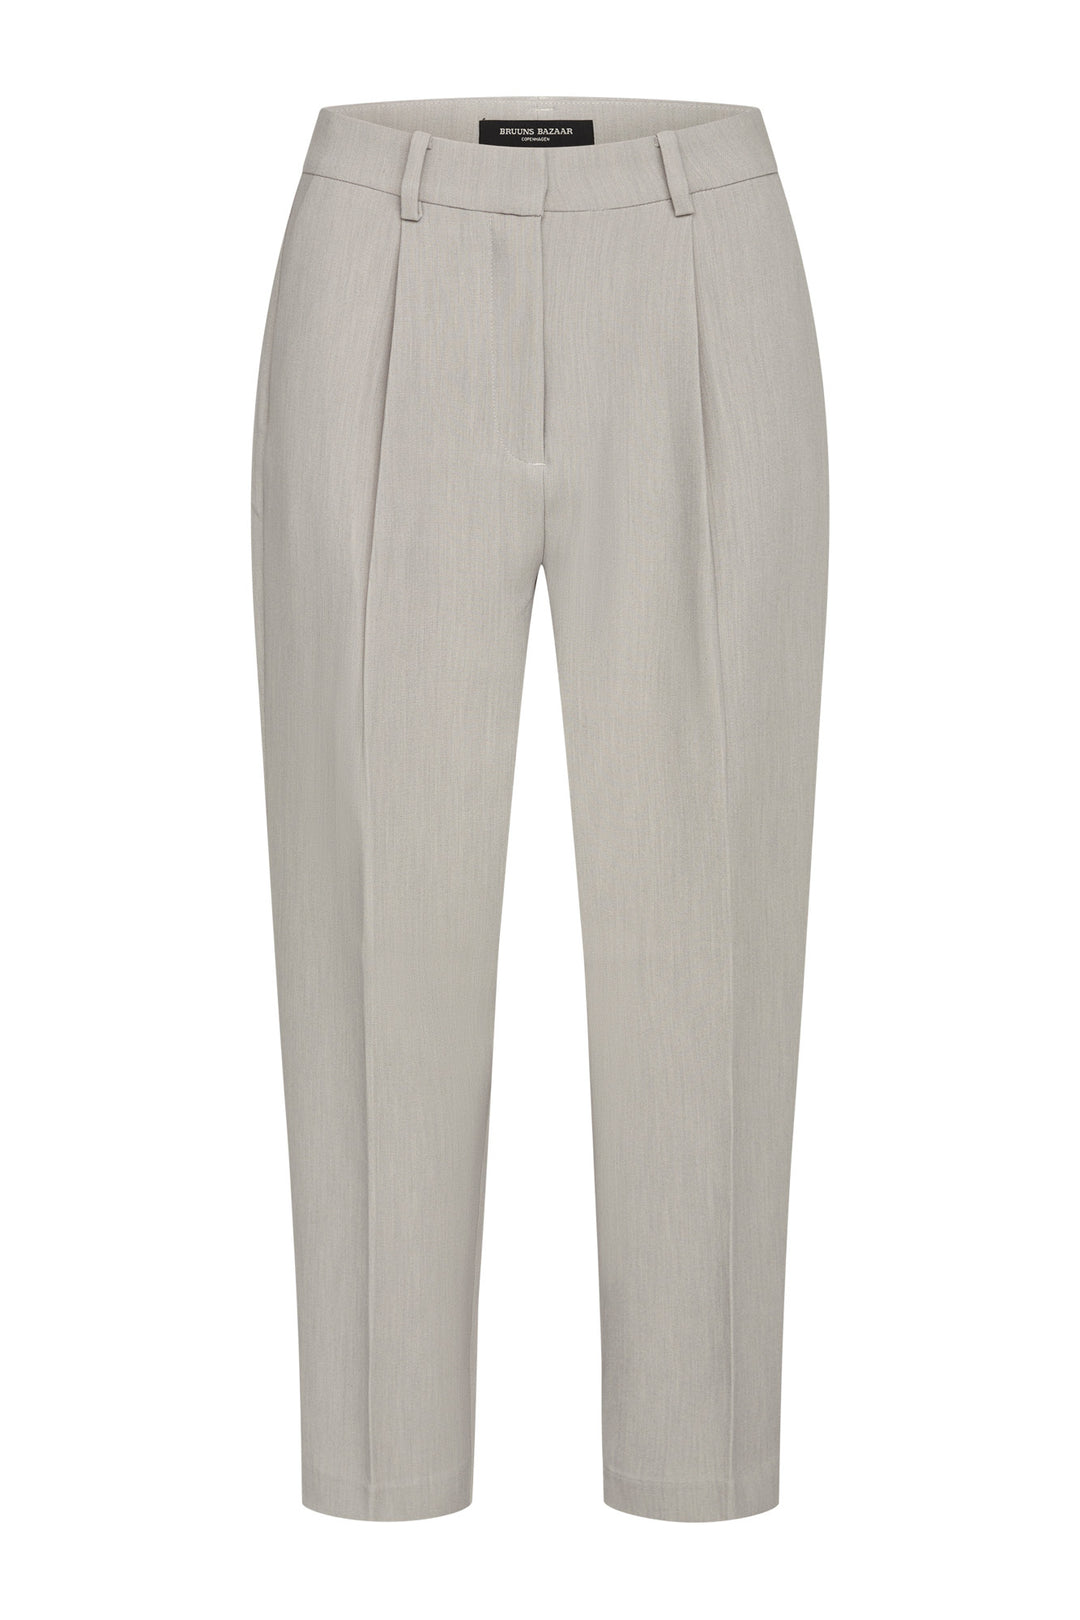 Bruuns Bazaar Women CindySusBBDagny pants Pants Light grey melange